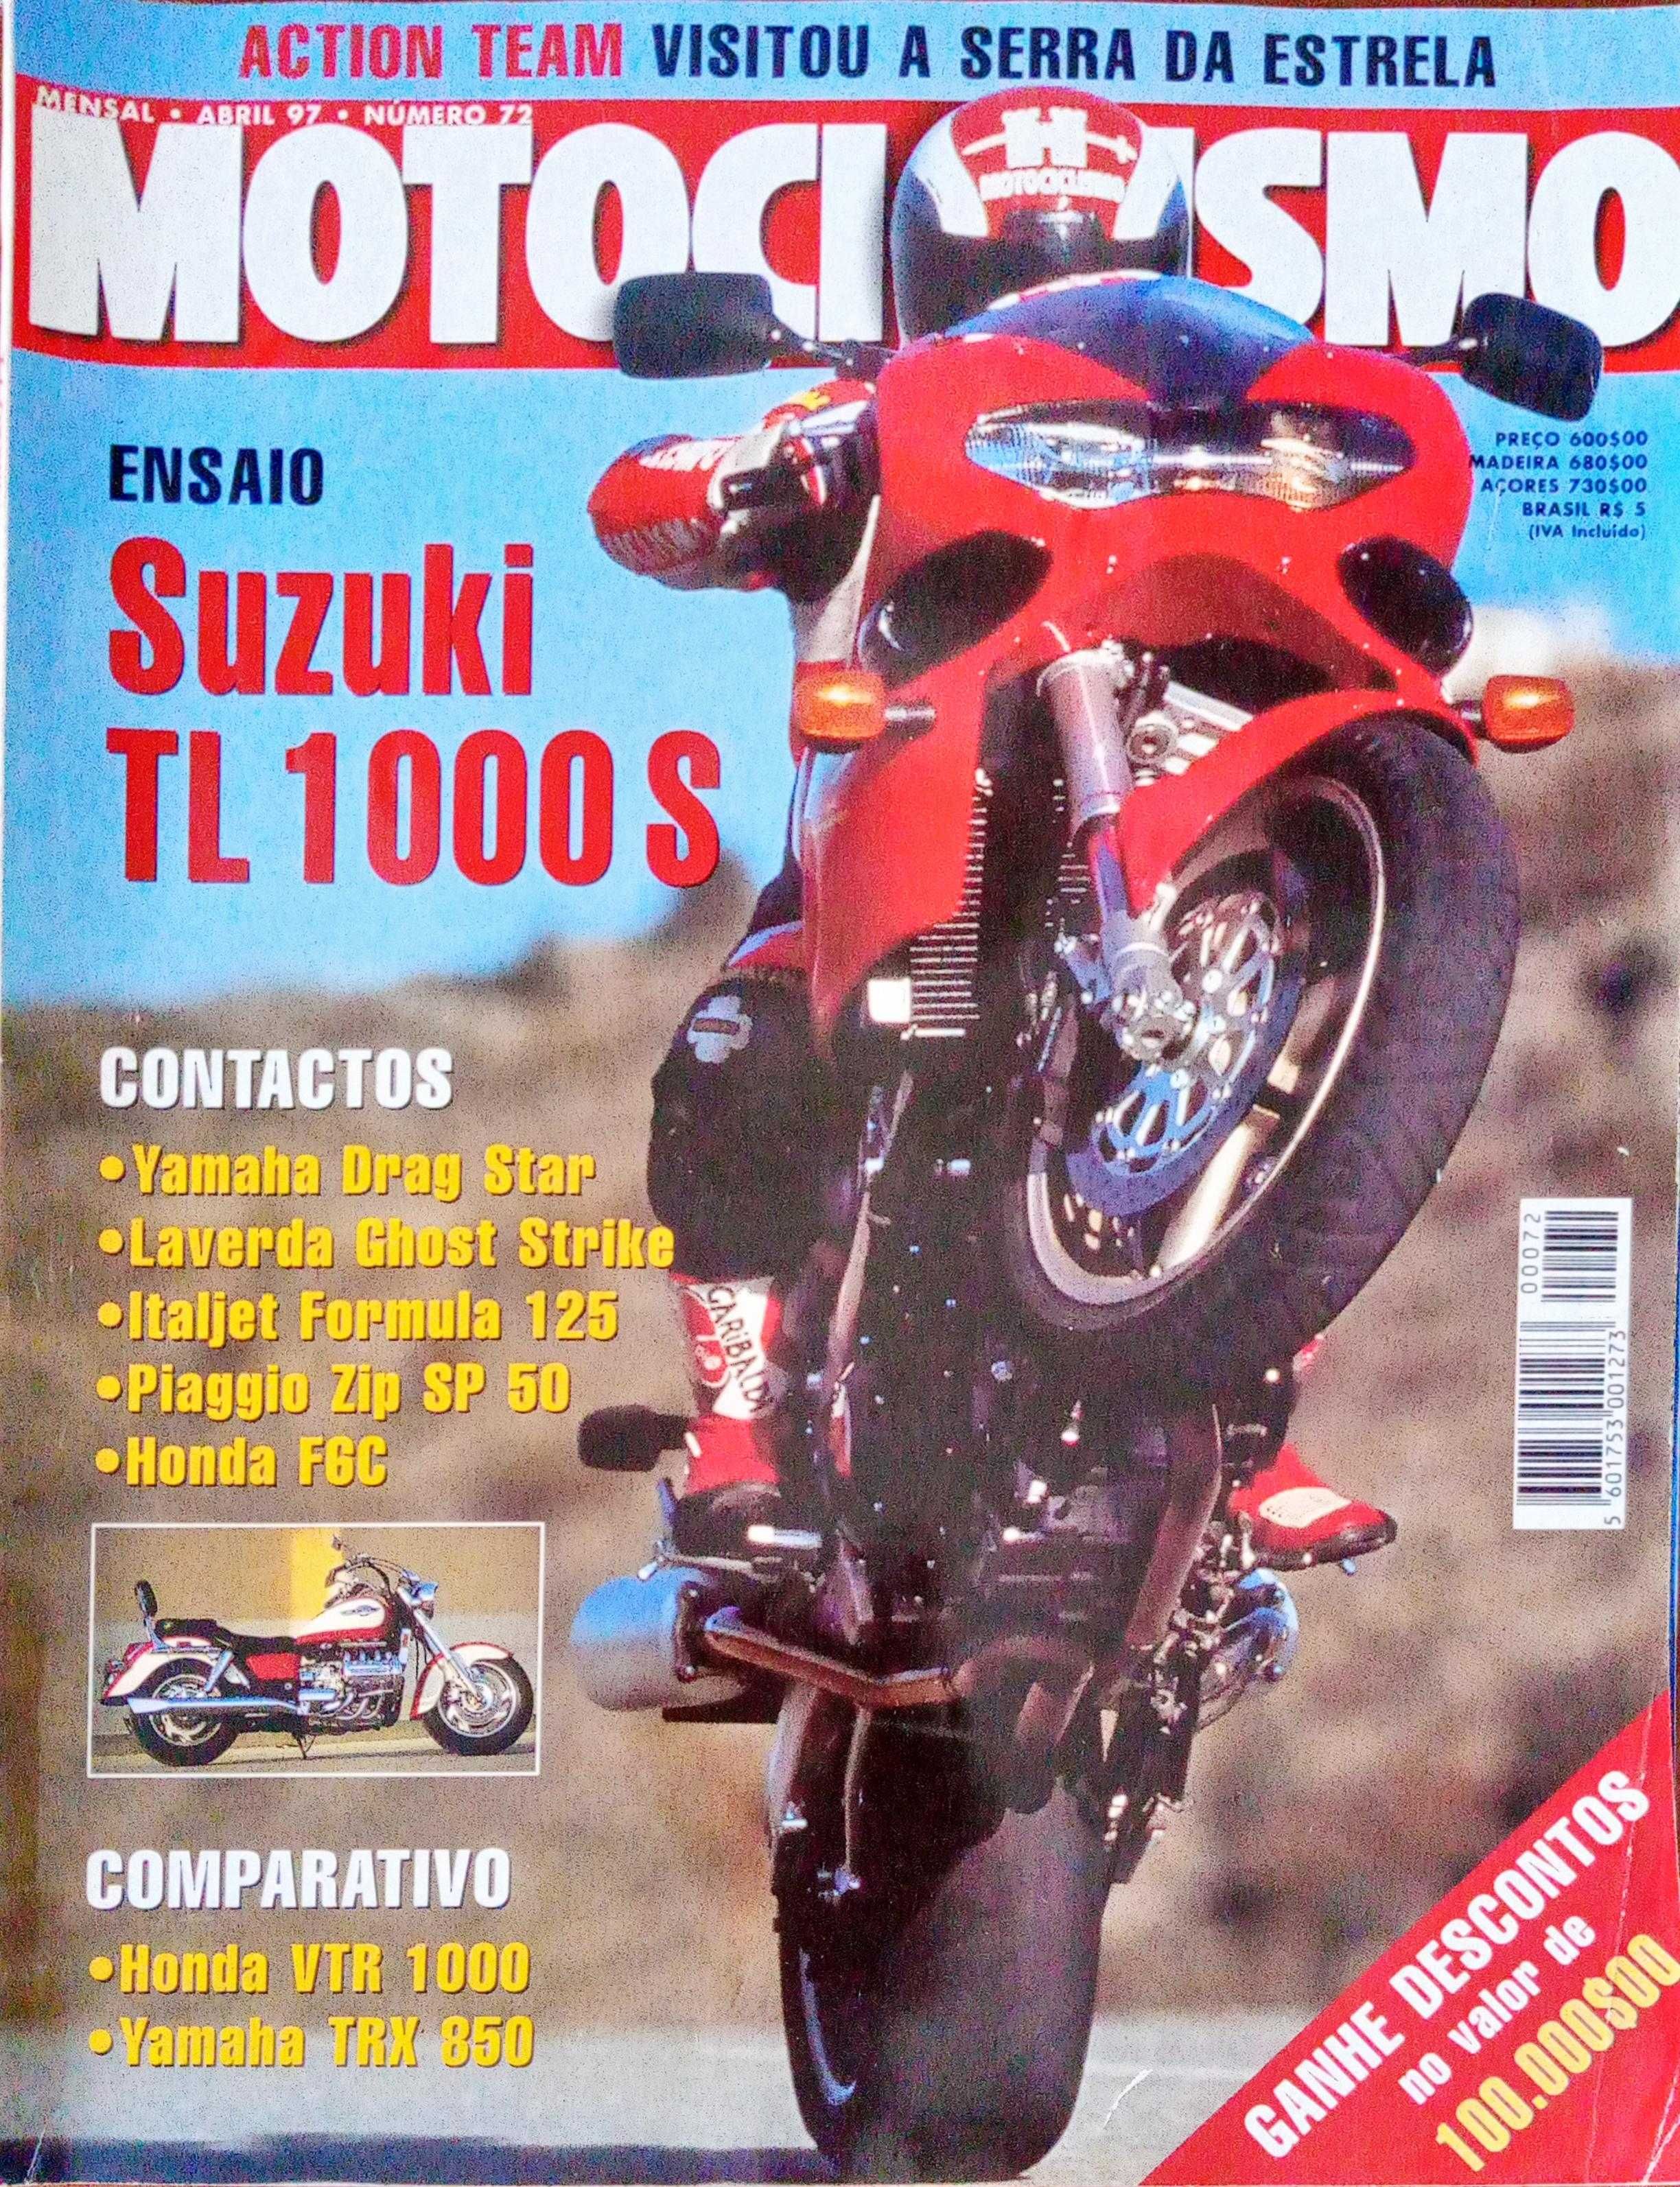 Motociclismo nº72 abr 97